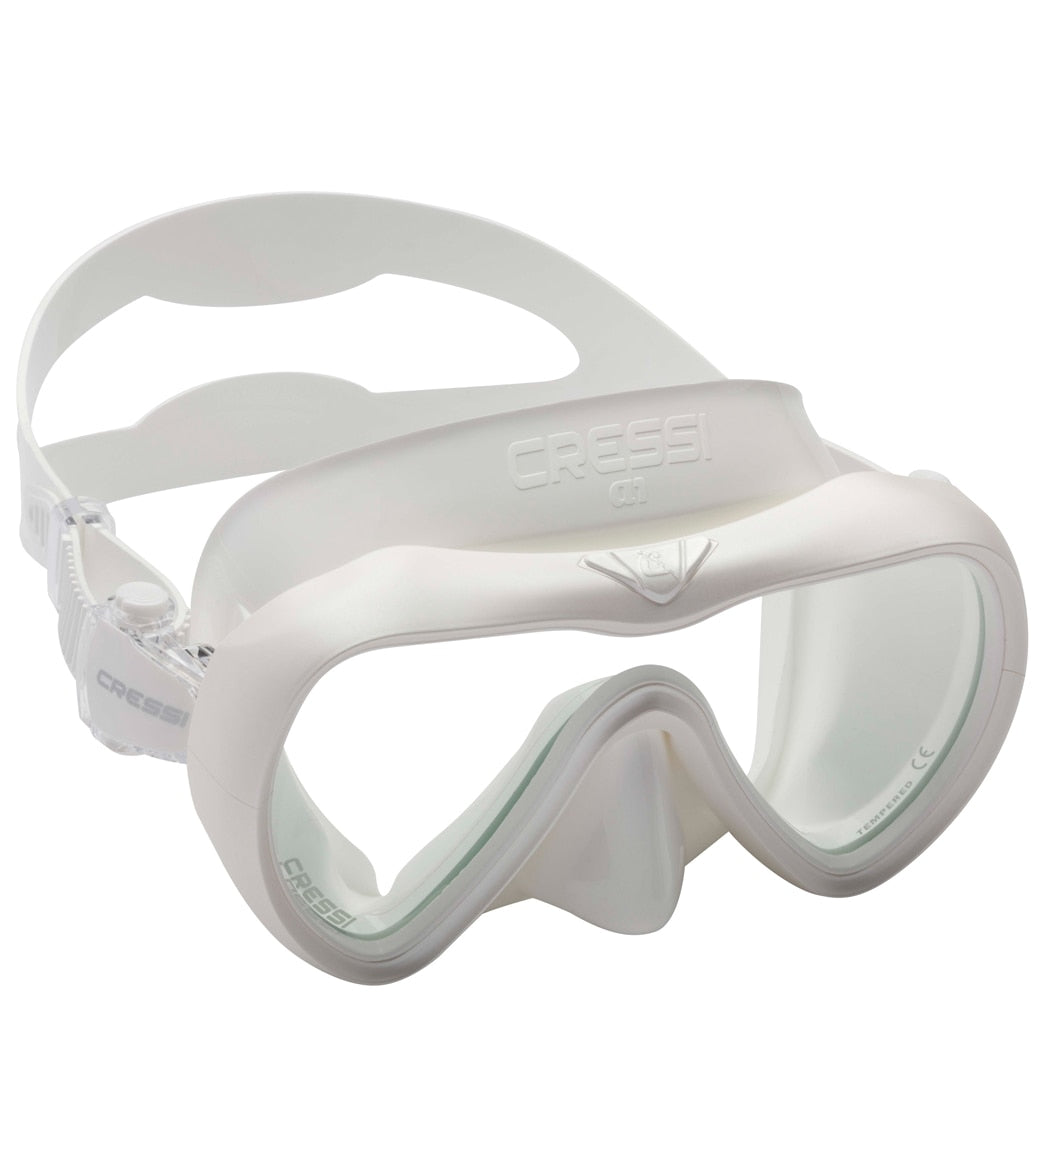 Cressi A1 Clear Anti-Fog Lens Scuba Mask at SwimOutlet.com